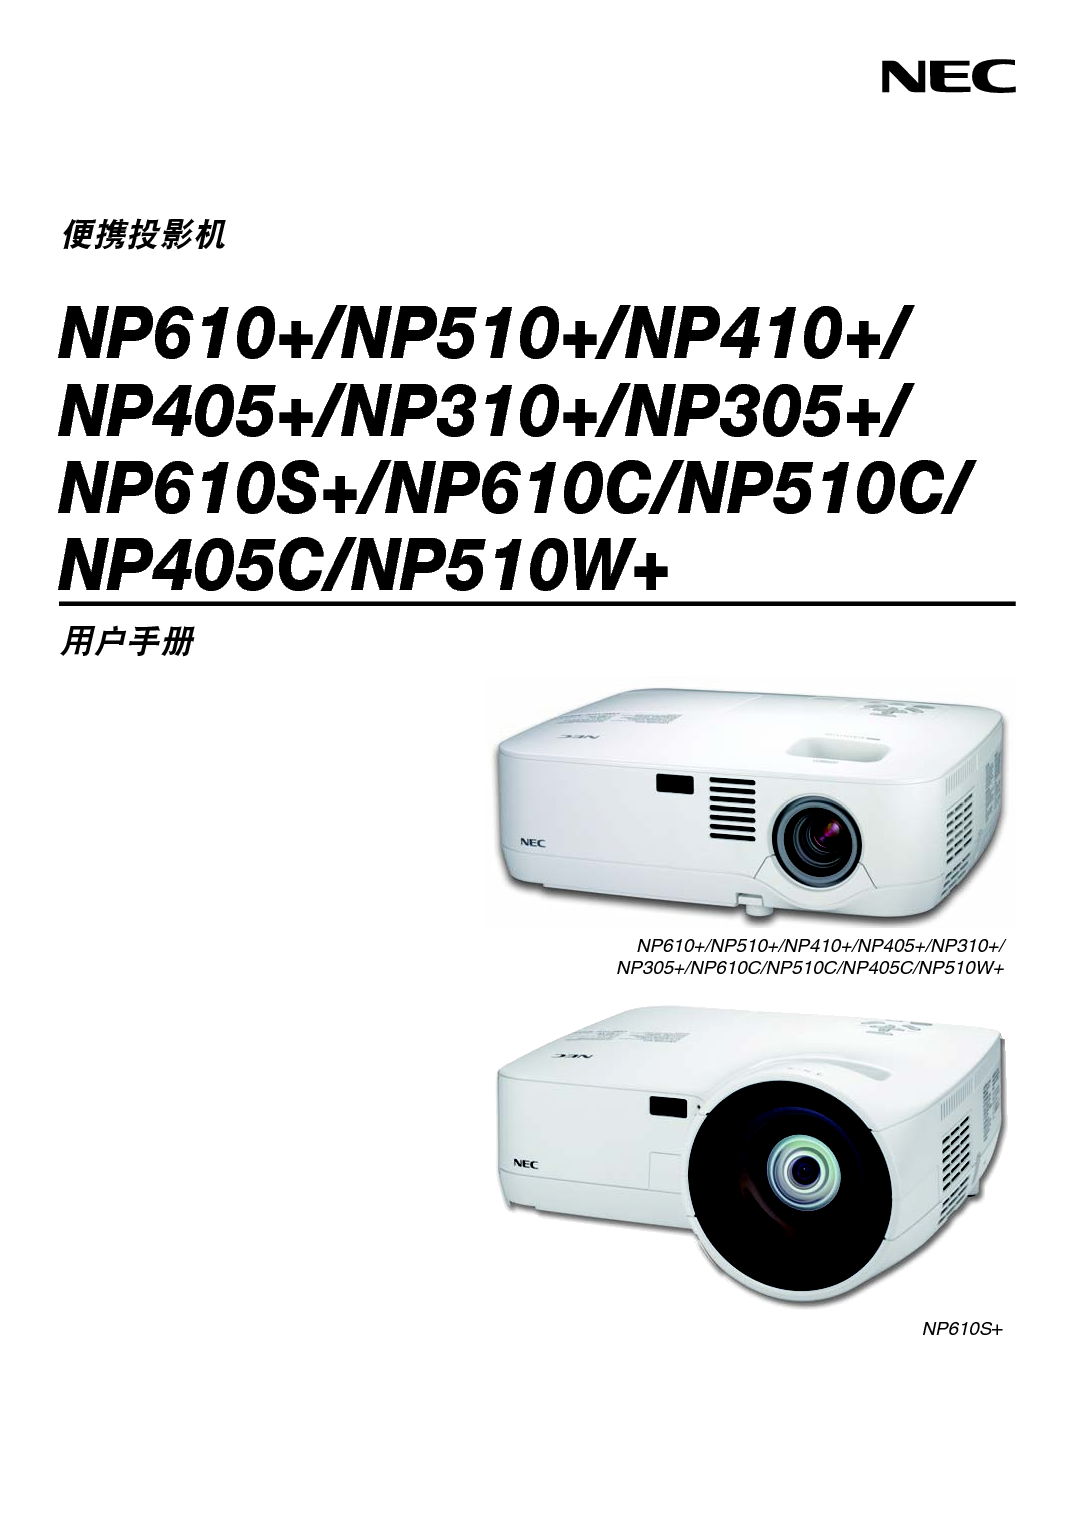 NEC NP305+, NP510C, NP610S+ 用户手册 封面